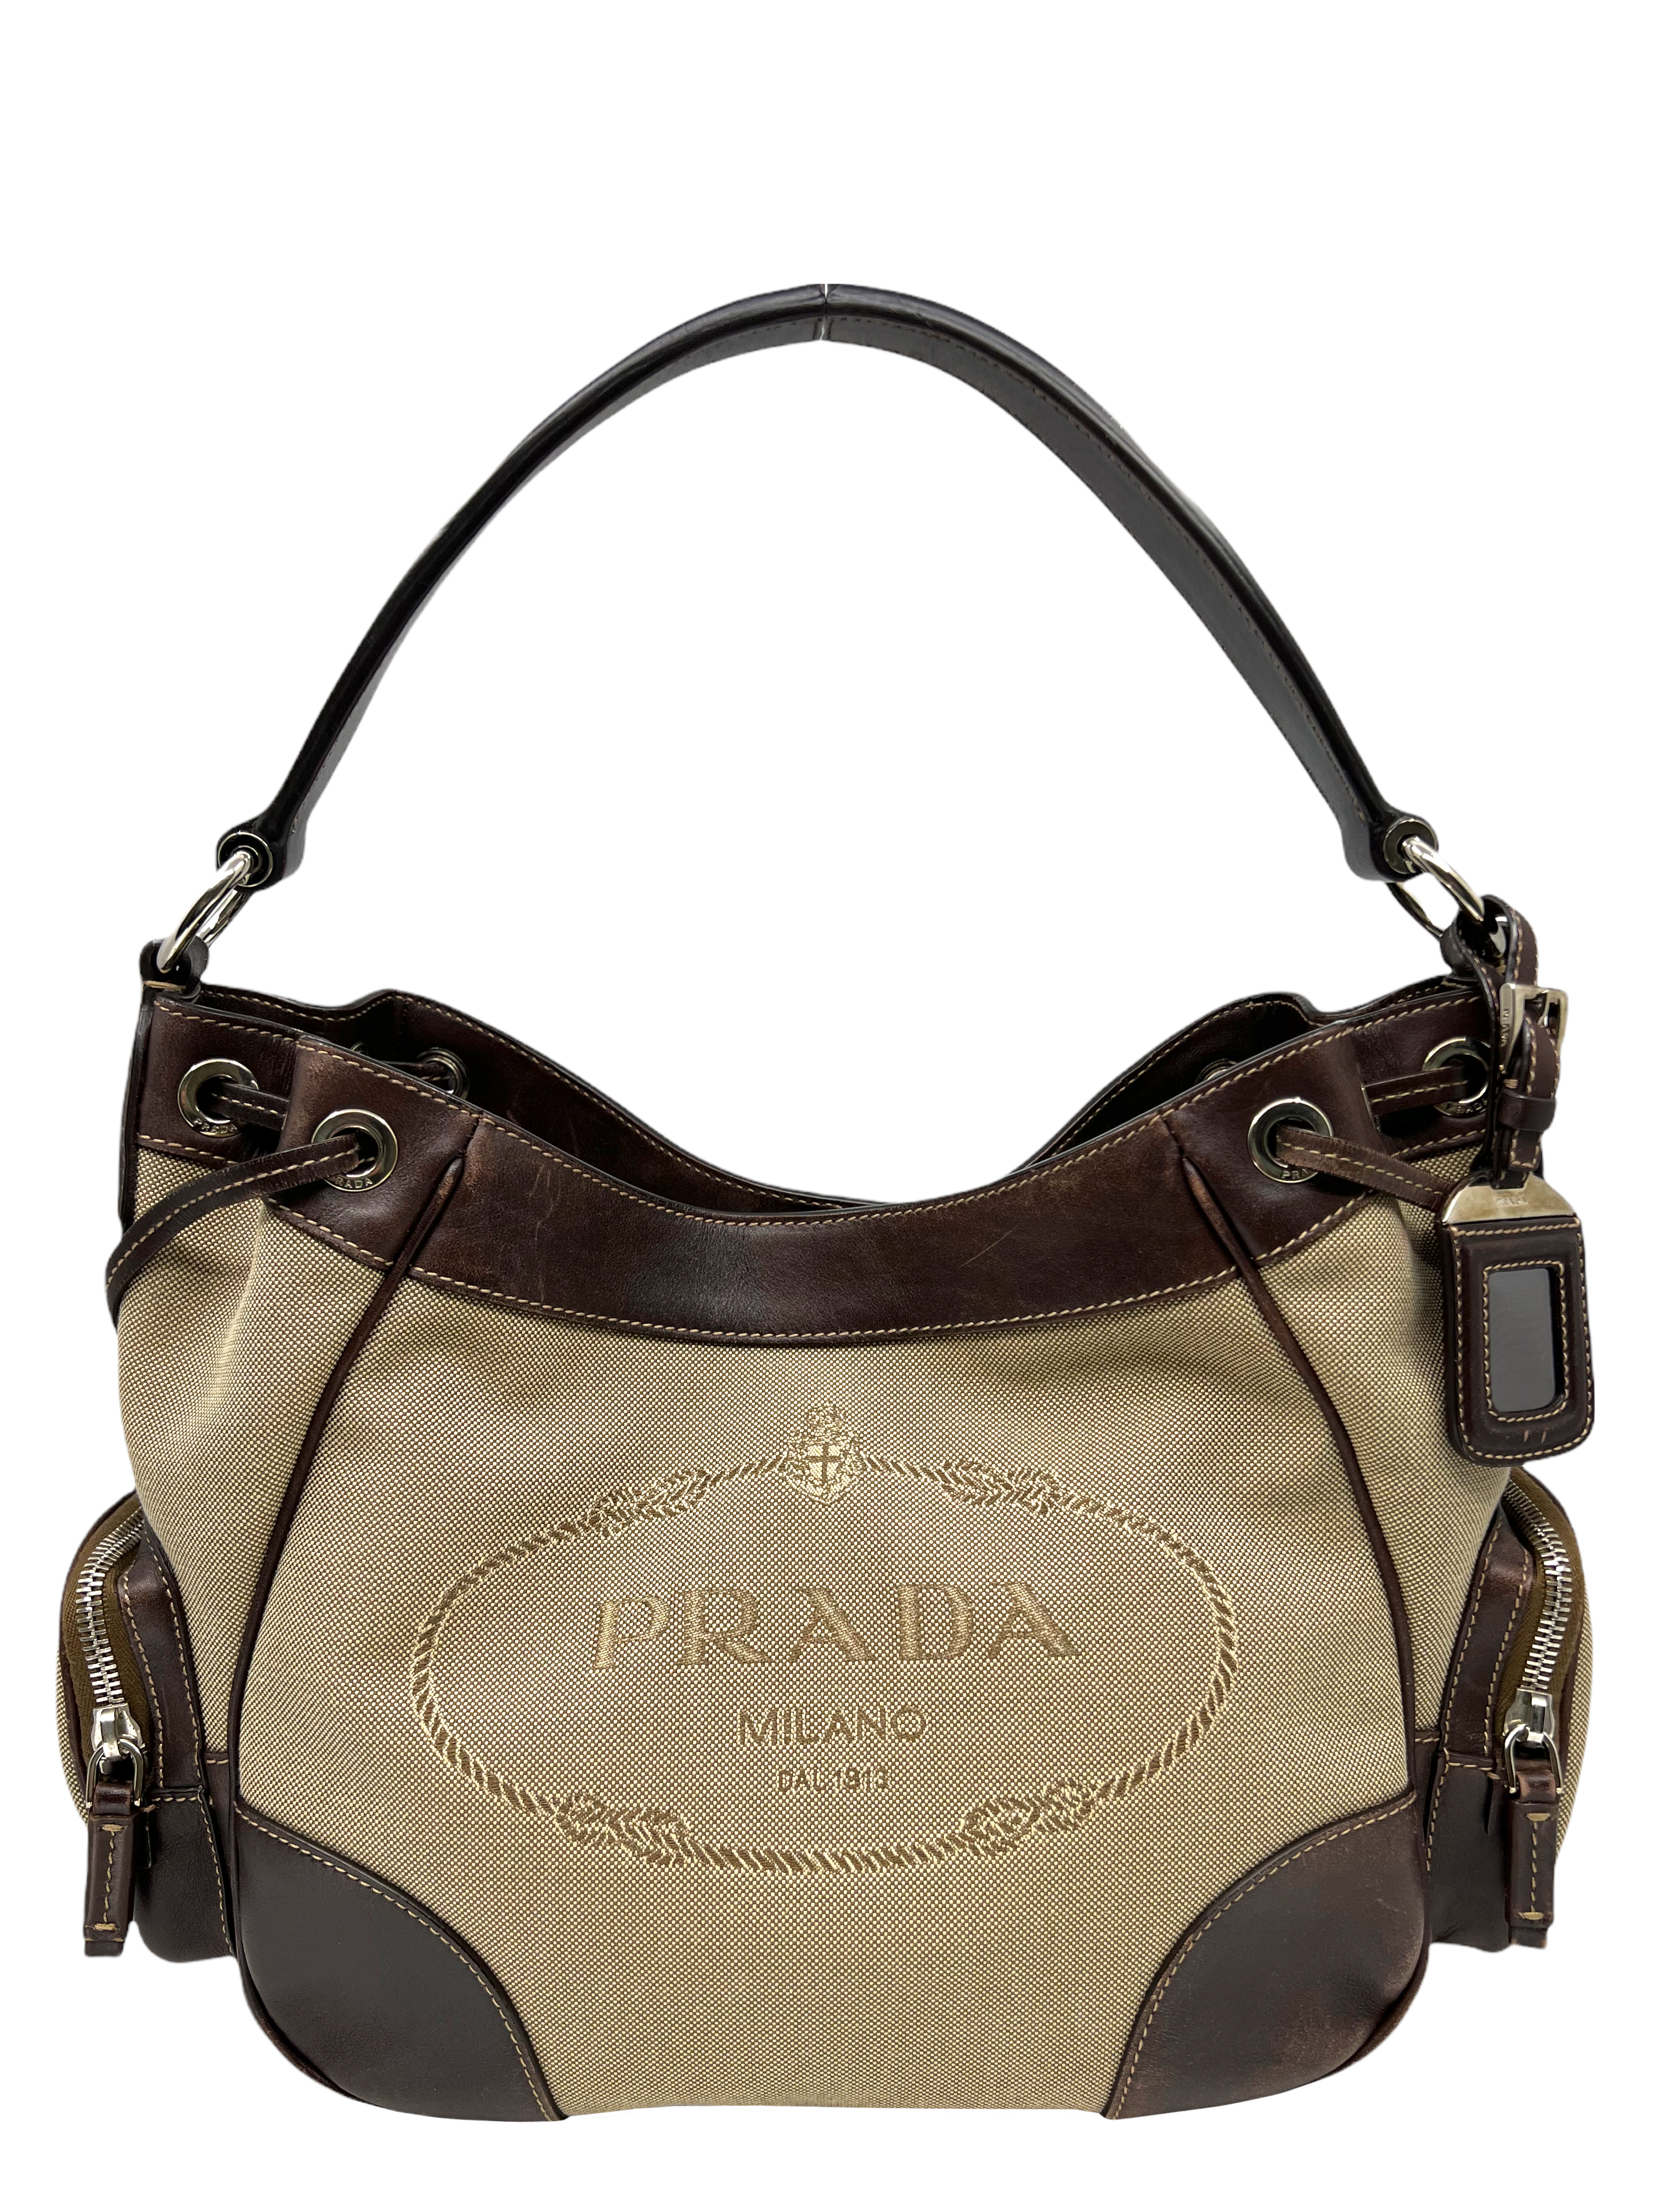 Prada Milano Dal 1913 Authentic Canvas Leather Vintage Bag Handbag